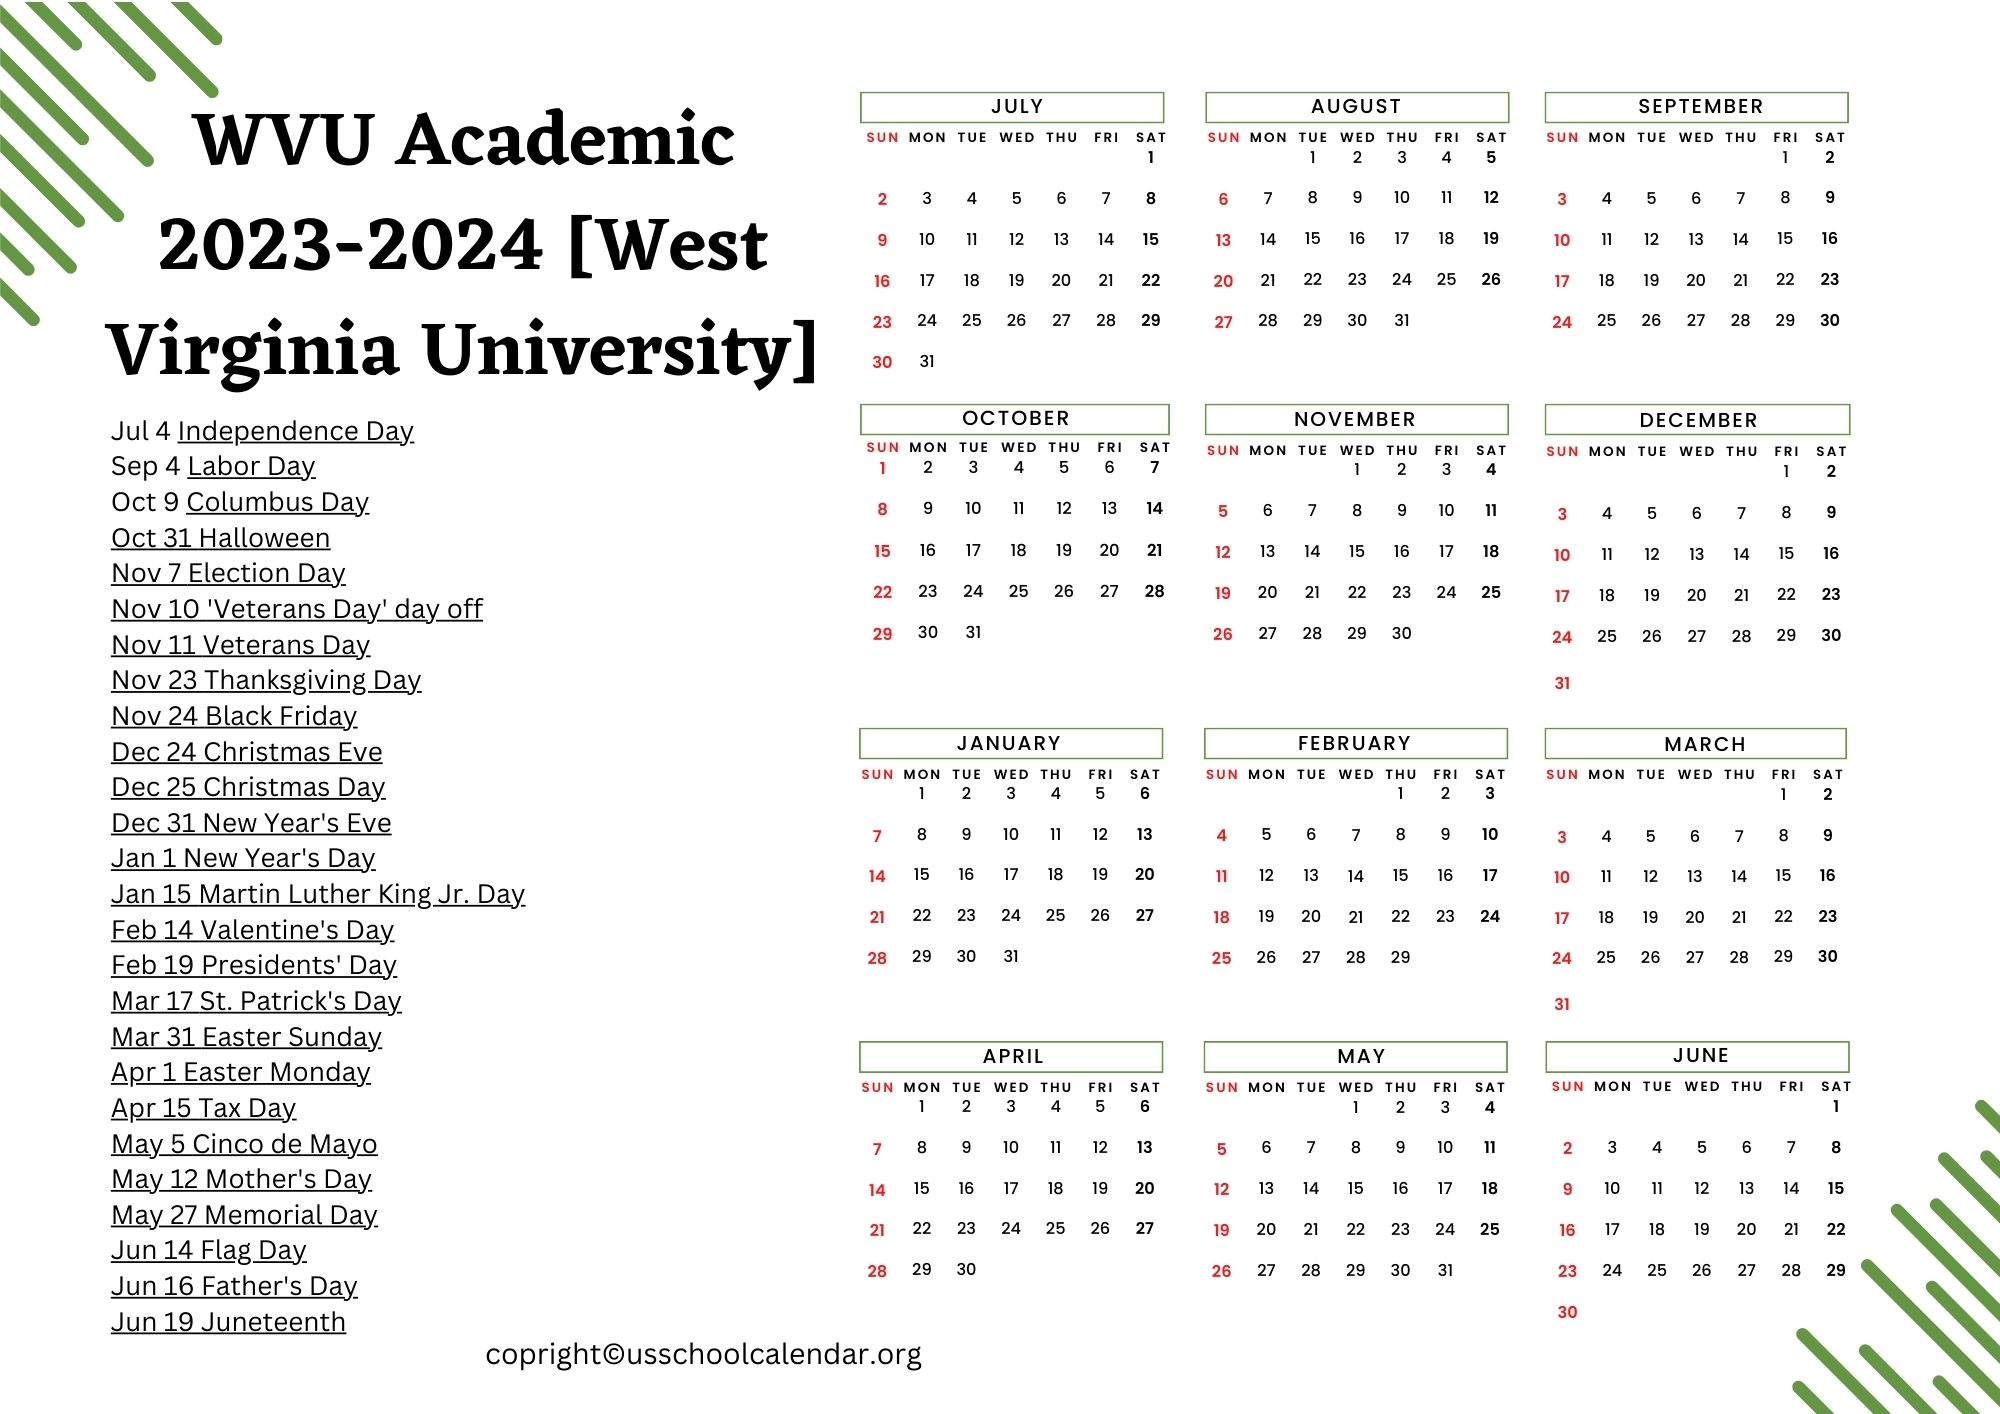 wvu-academic-calendar-2023-2024-west-virginia-university